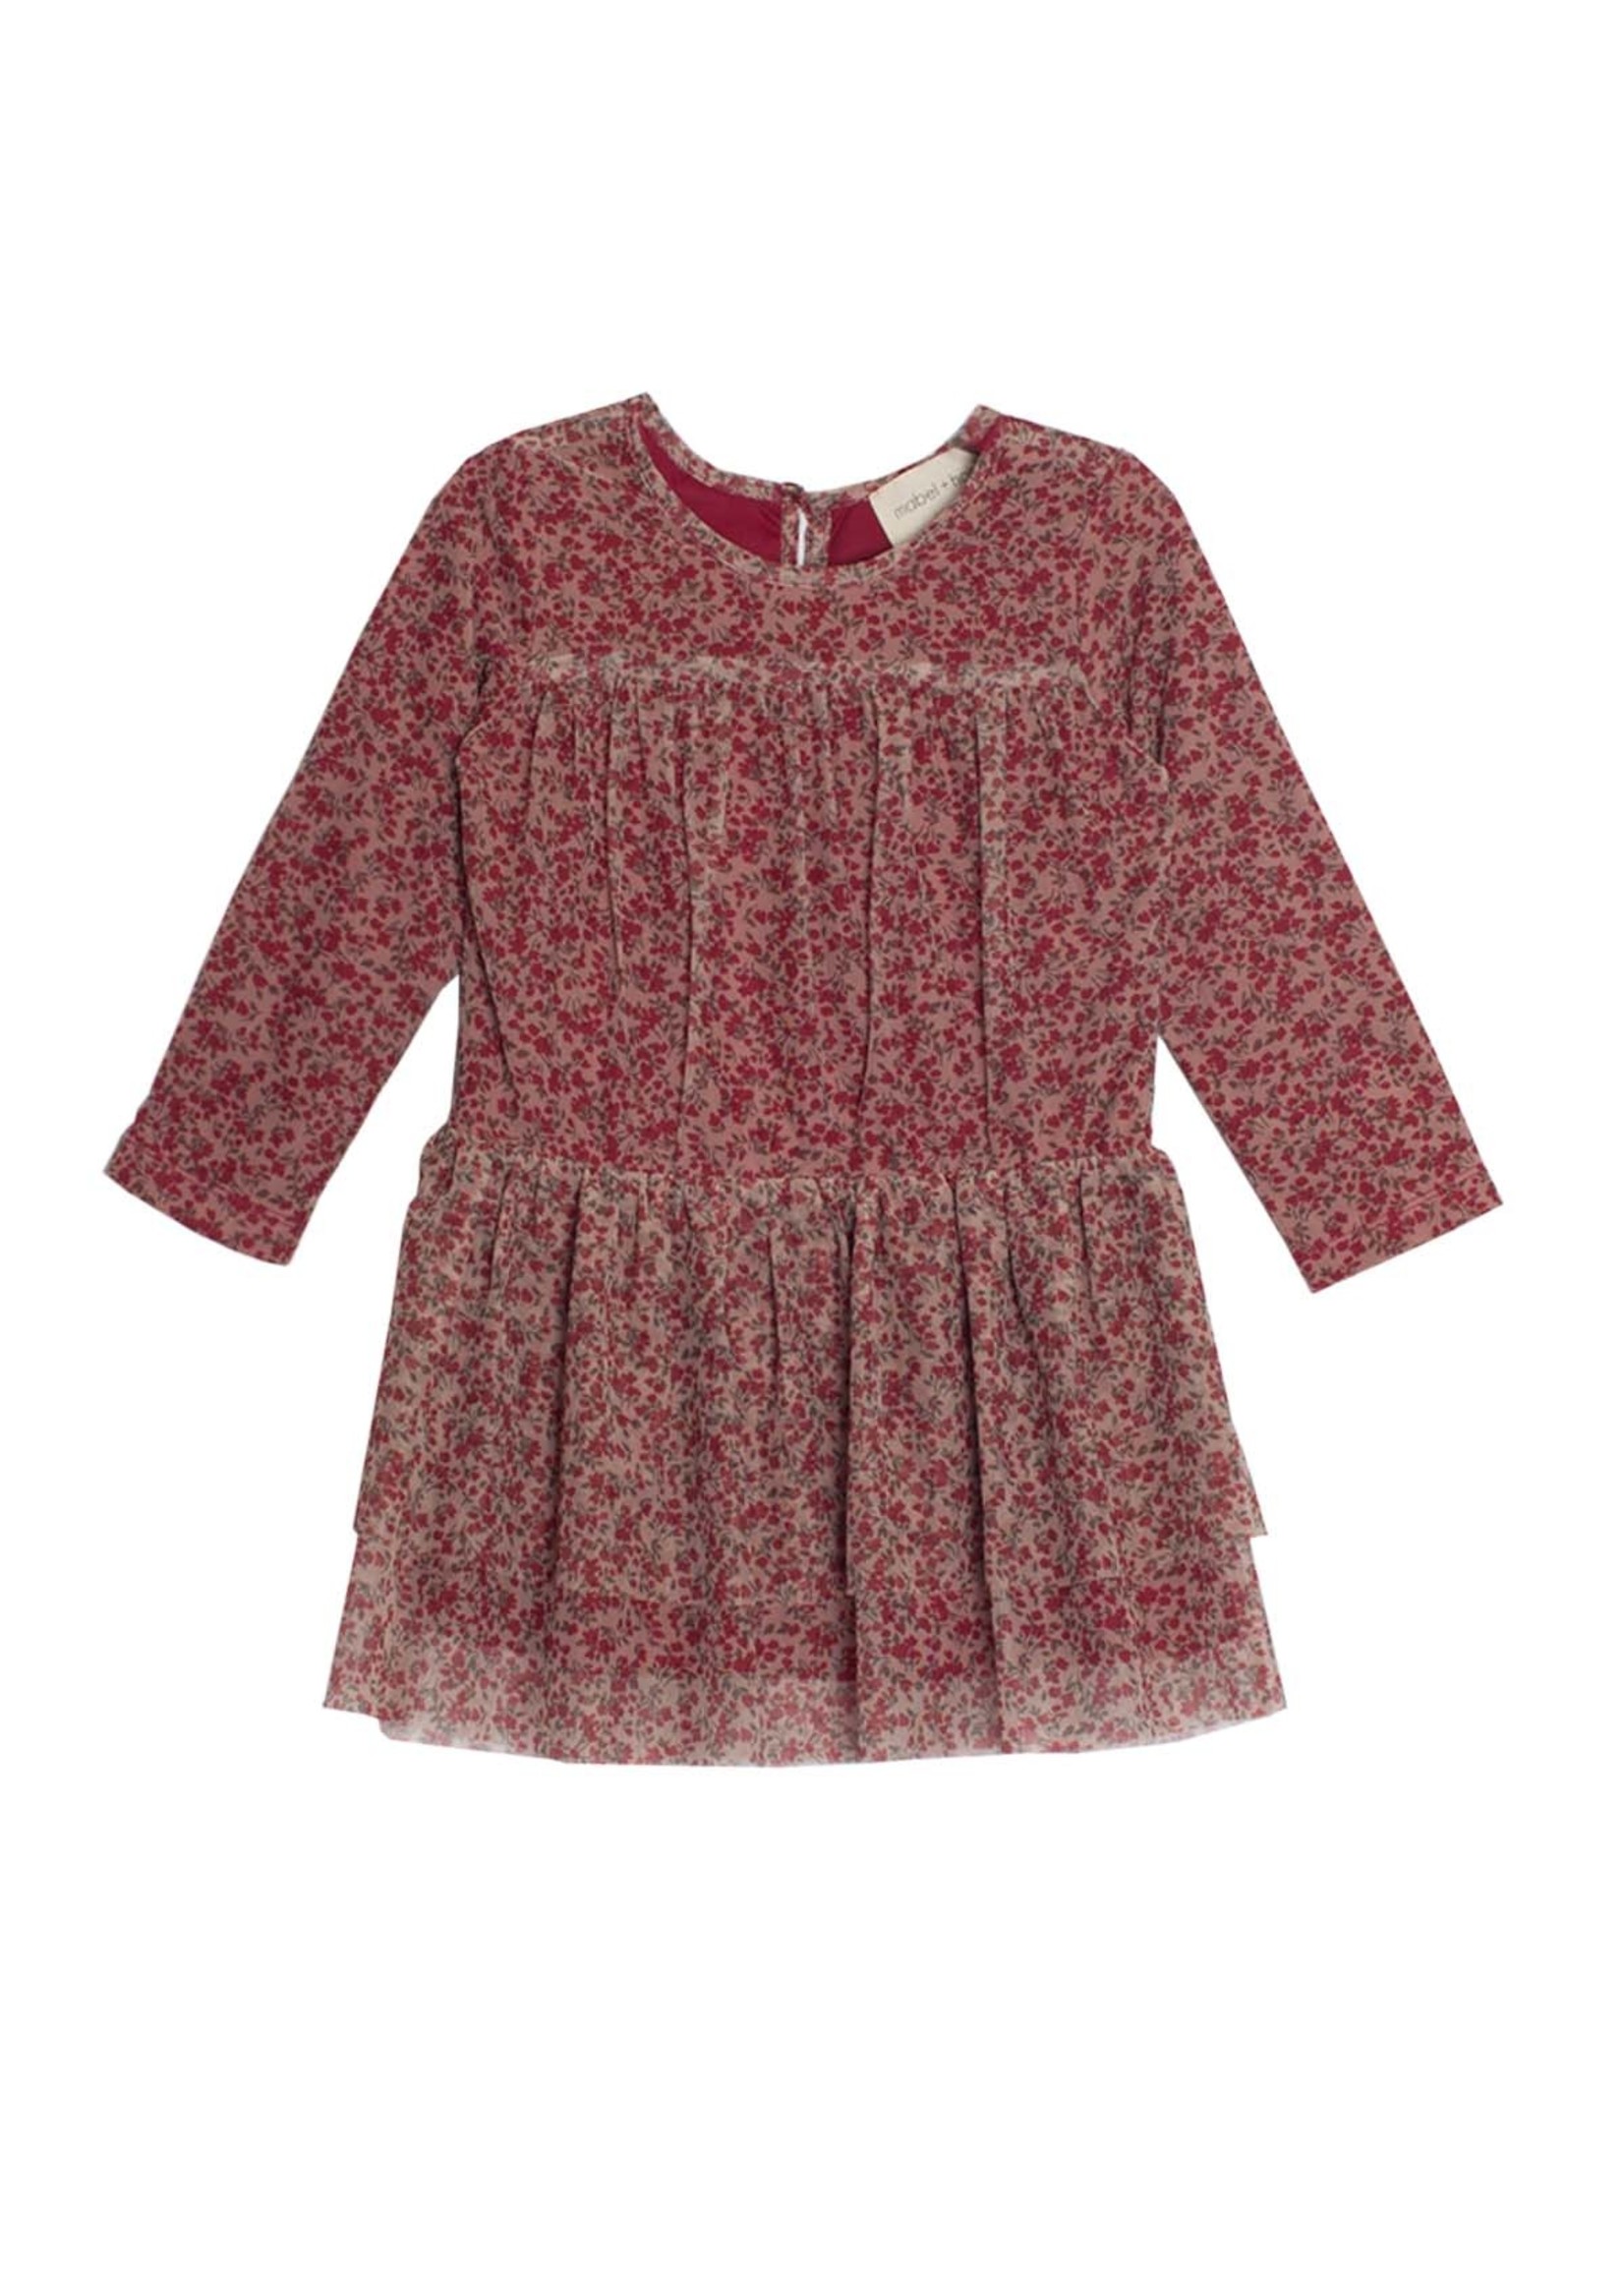 Mabel + Honey Cranberry Knit & Tulle Dress